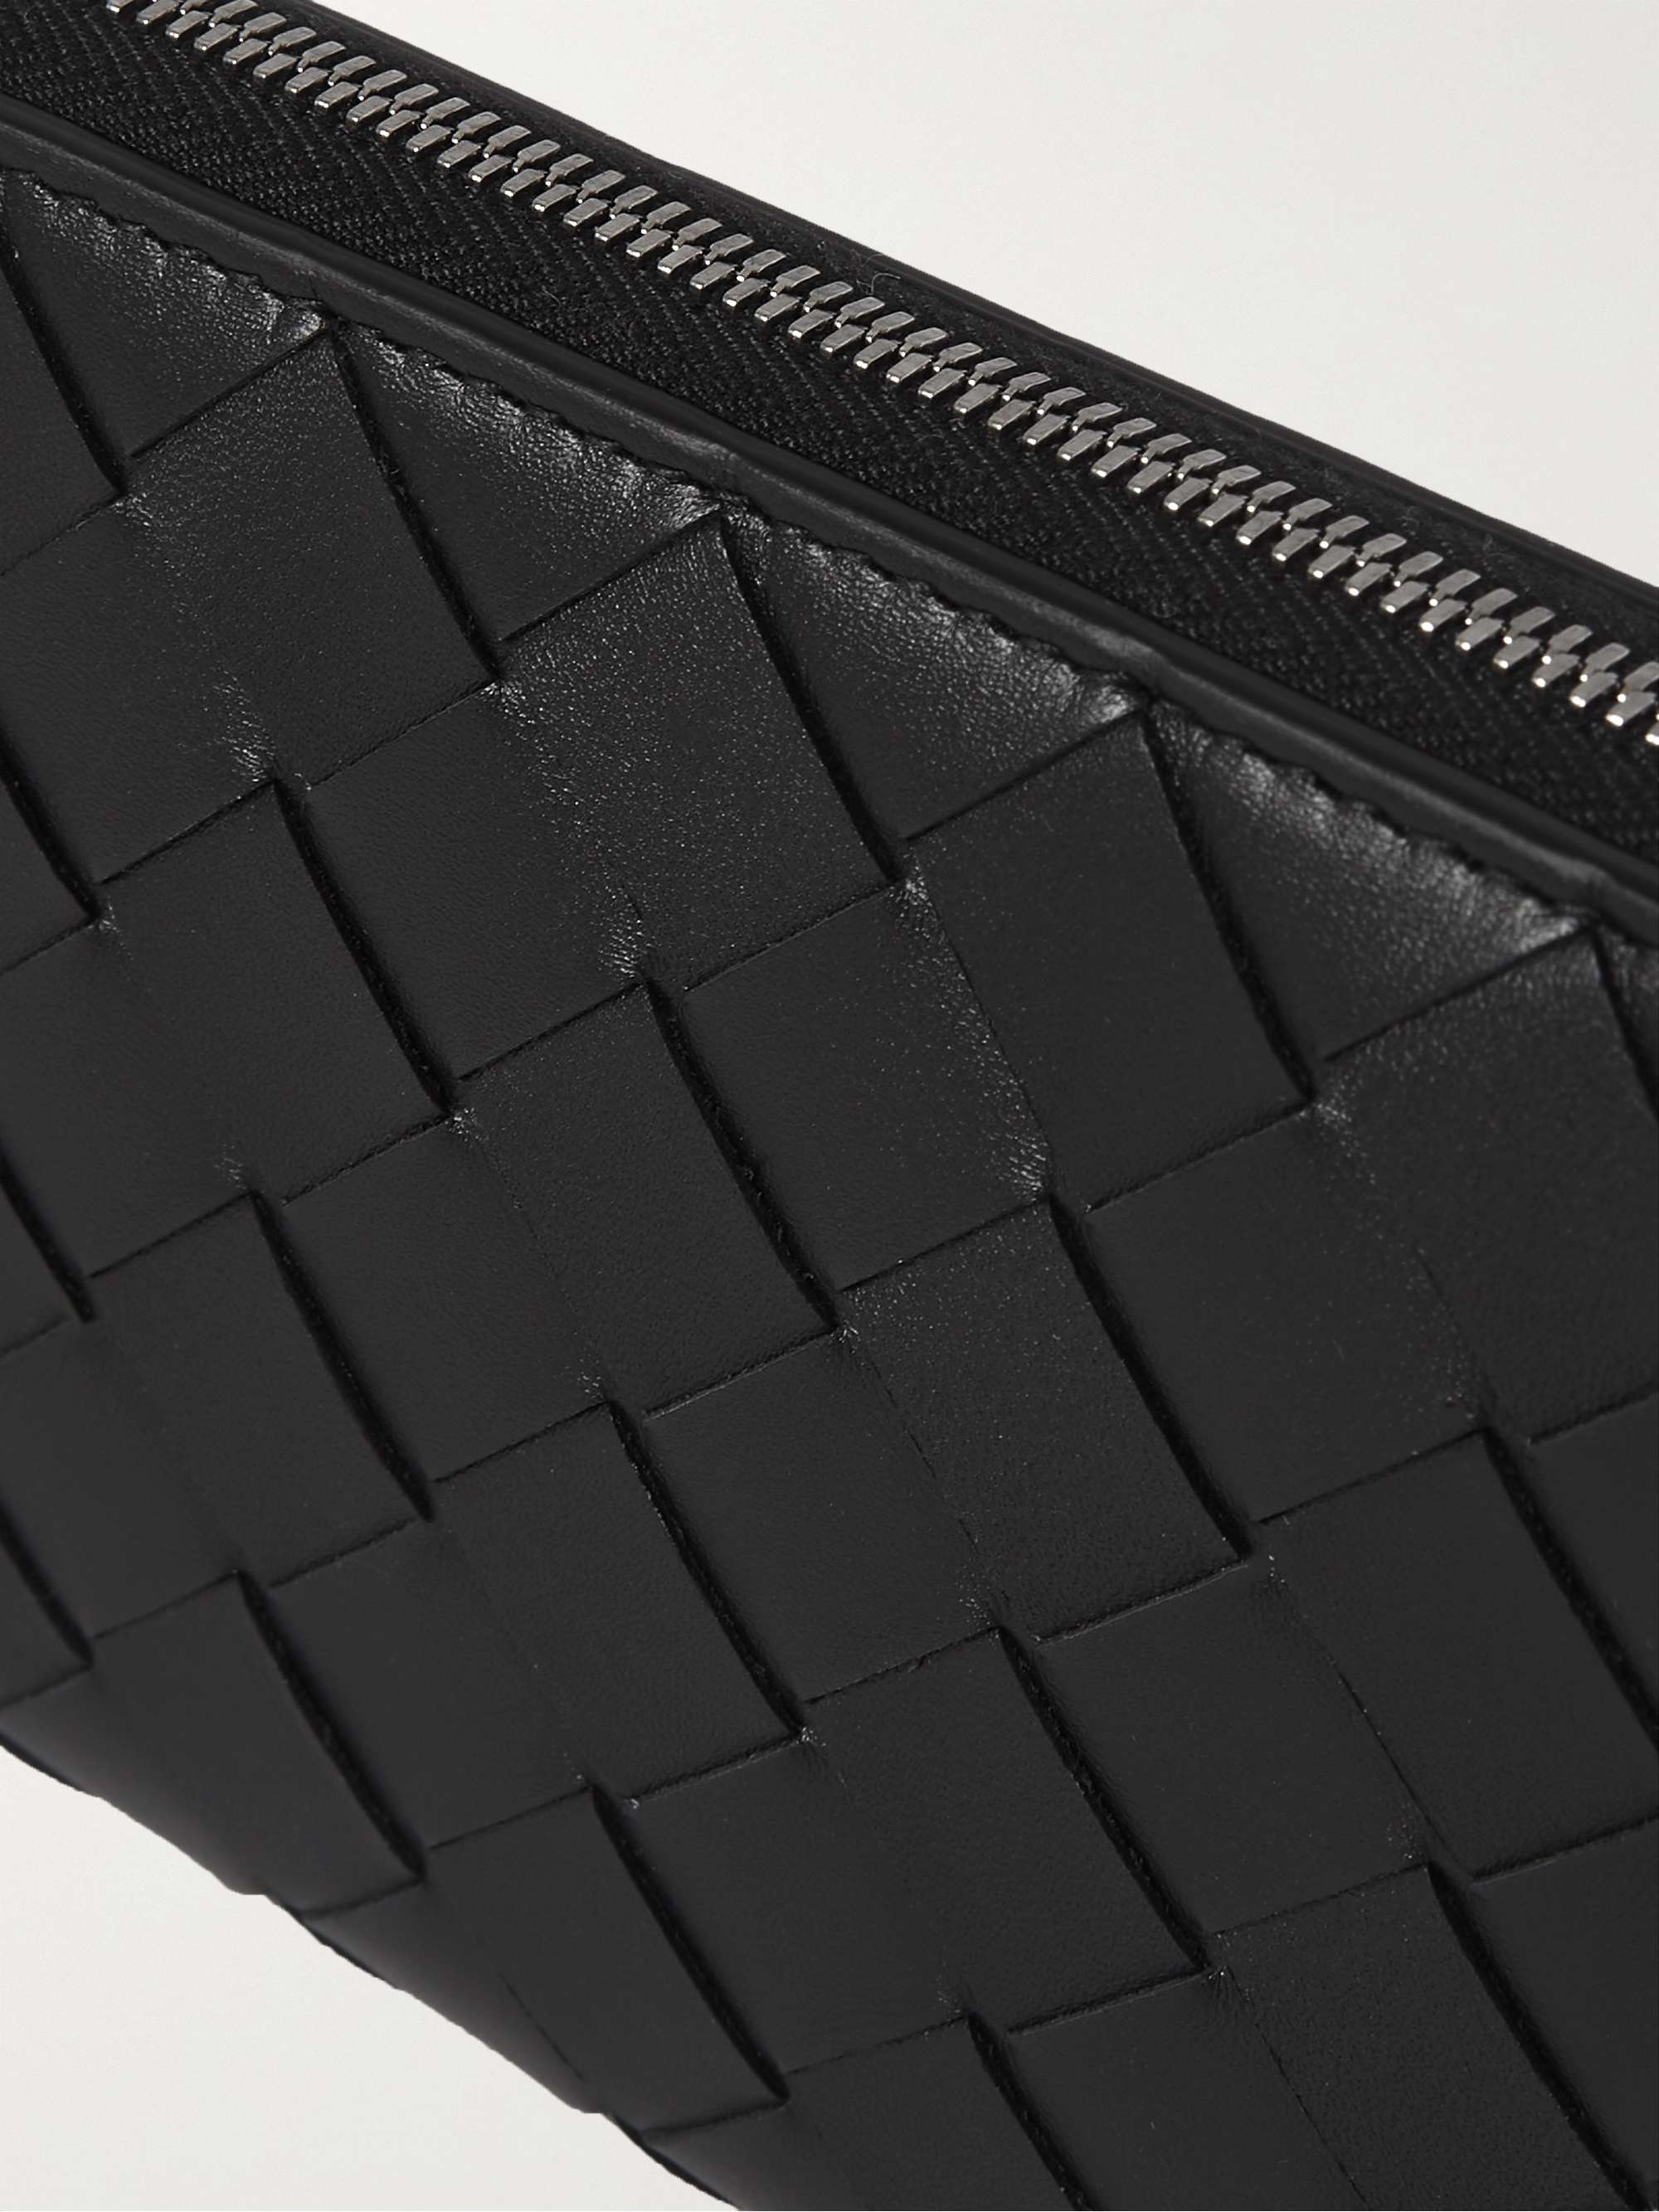 BOTTEGA VENETA Intrecciato Leather Zip-Around Wallet